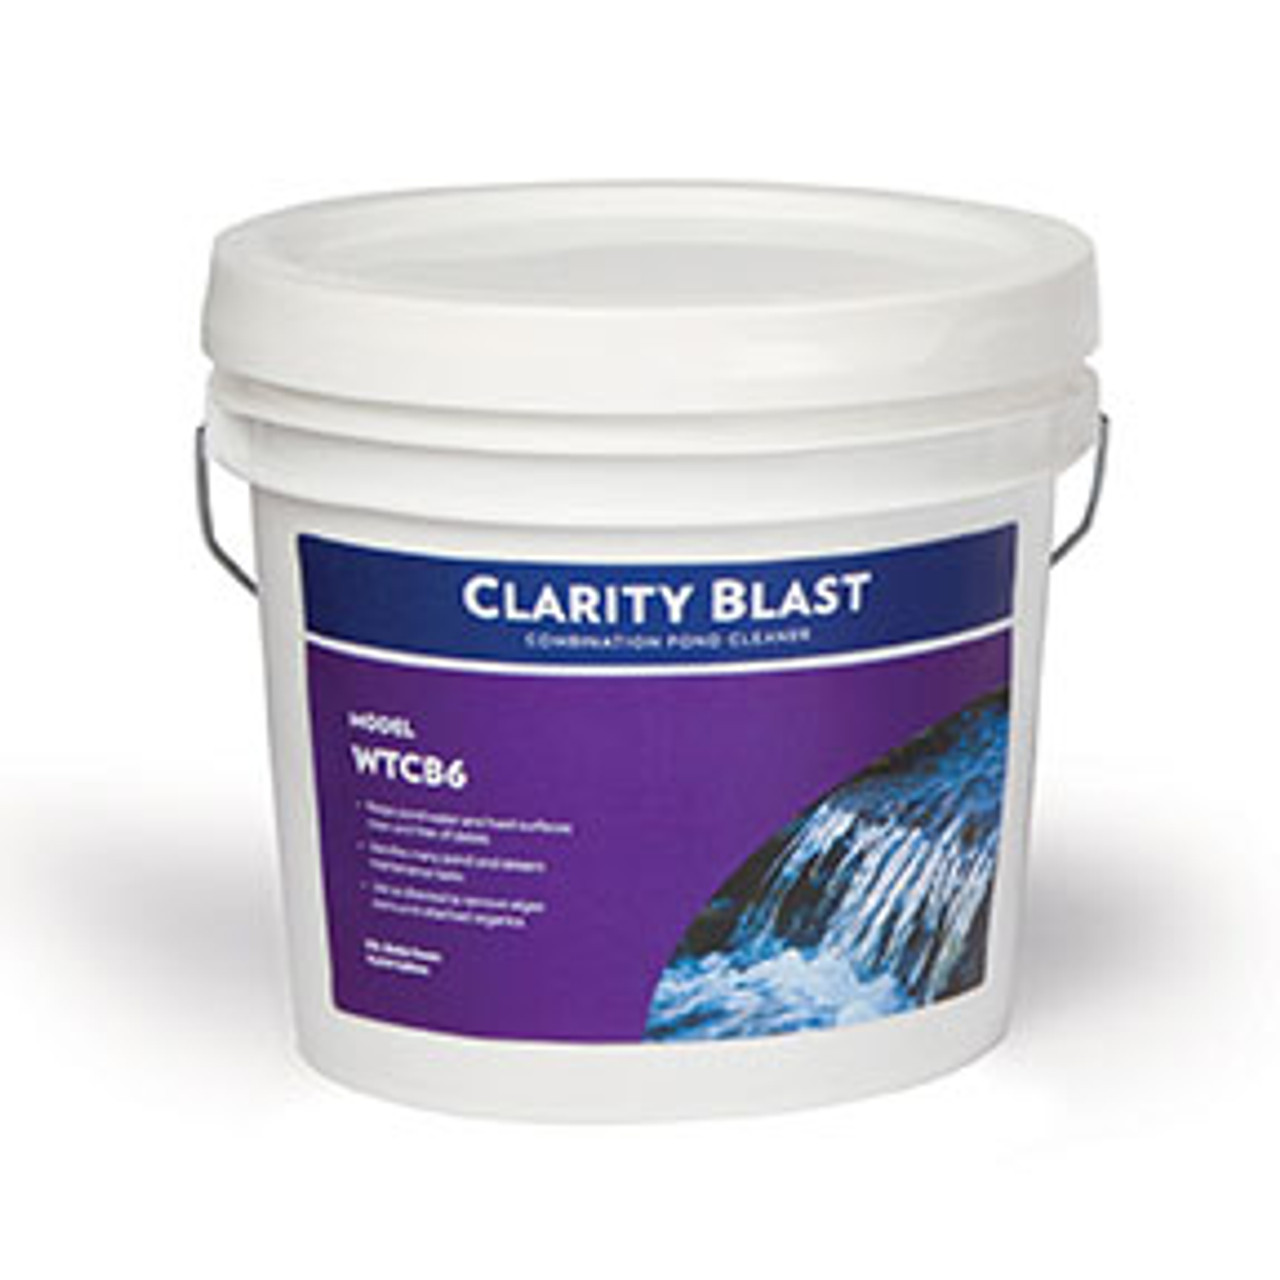 Atlantic Water Gardens Clarity Blast Combination Pond Cleaner - 6 lb.